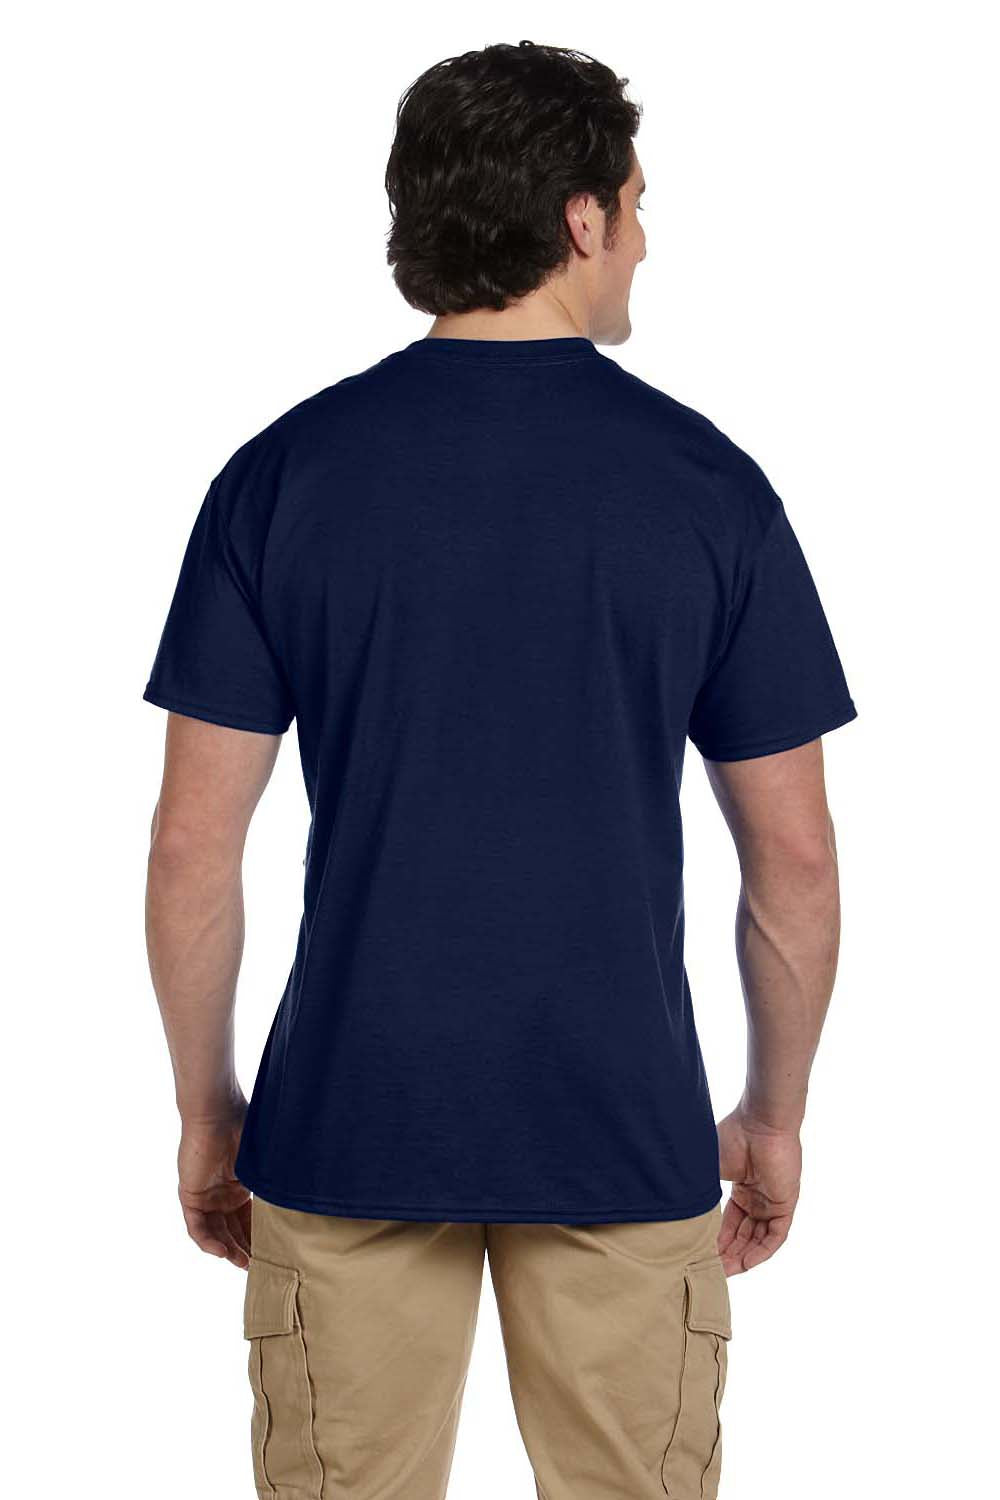 Gildan G830 Mens DryBlend Moisture Wicking Short Sleeve Crewneck T-Shirt w/ Pocket Navy Blue Back